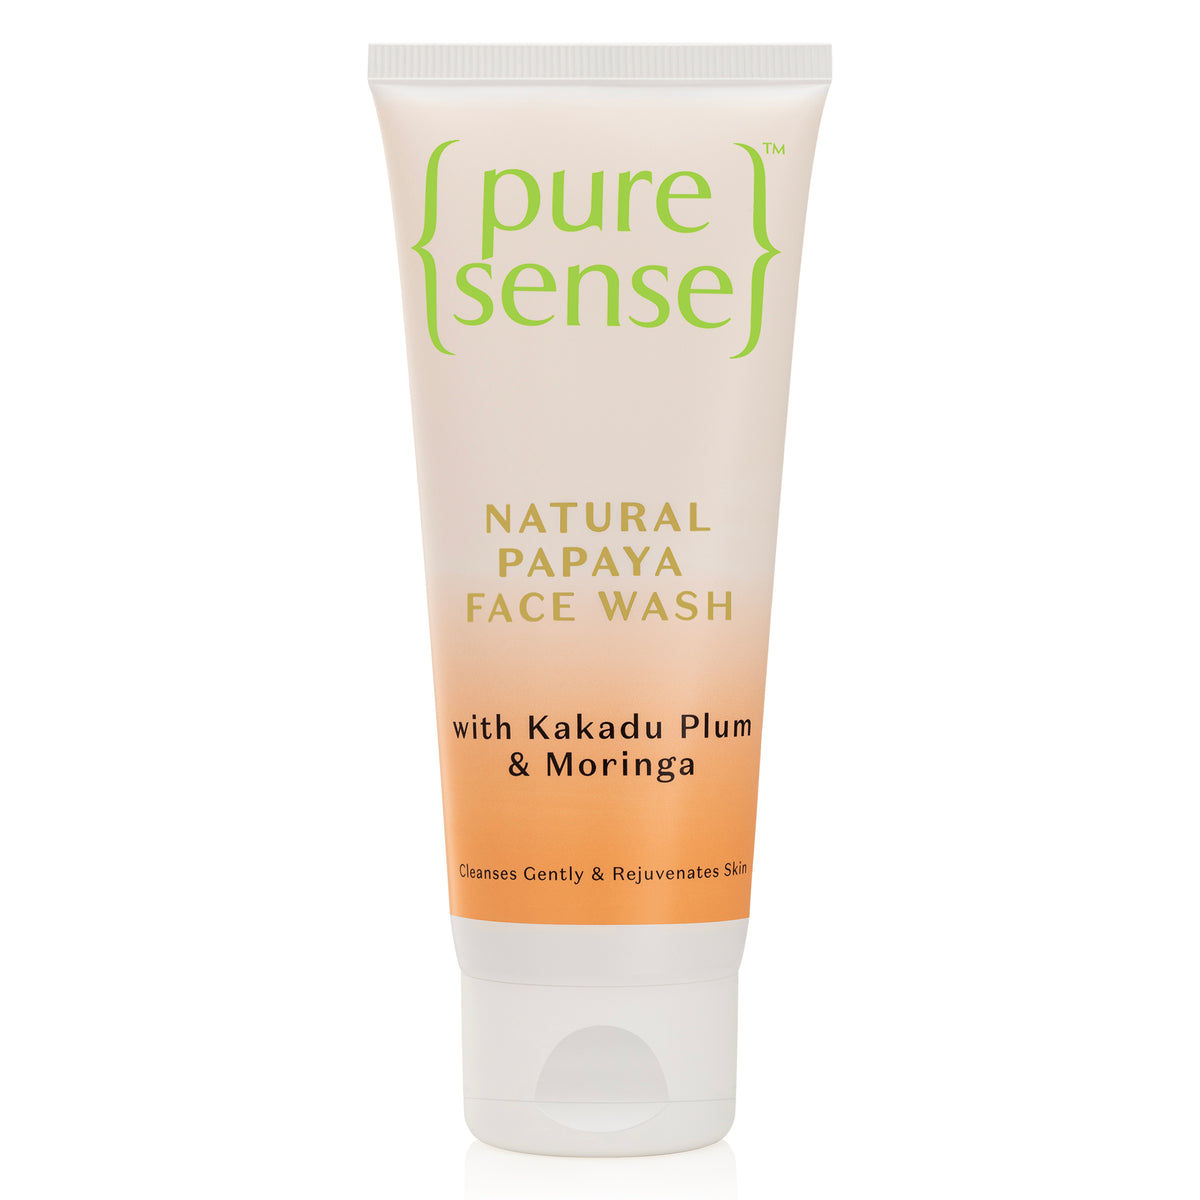 Natural Papaya Face Wash | From the makers of Parachute Advansed | 100ml